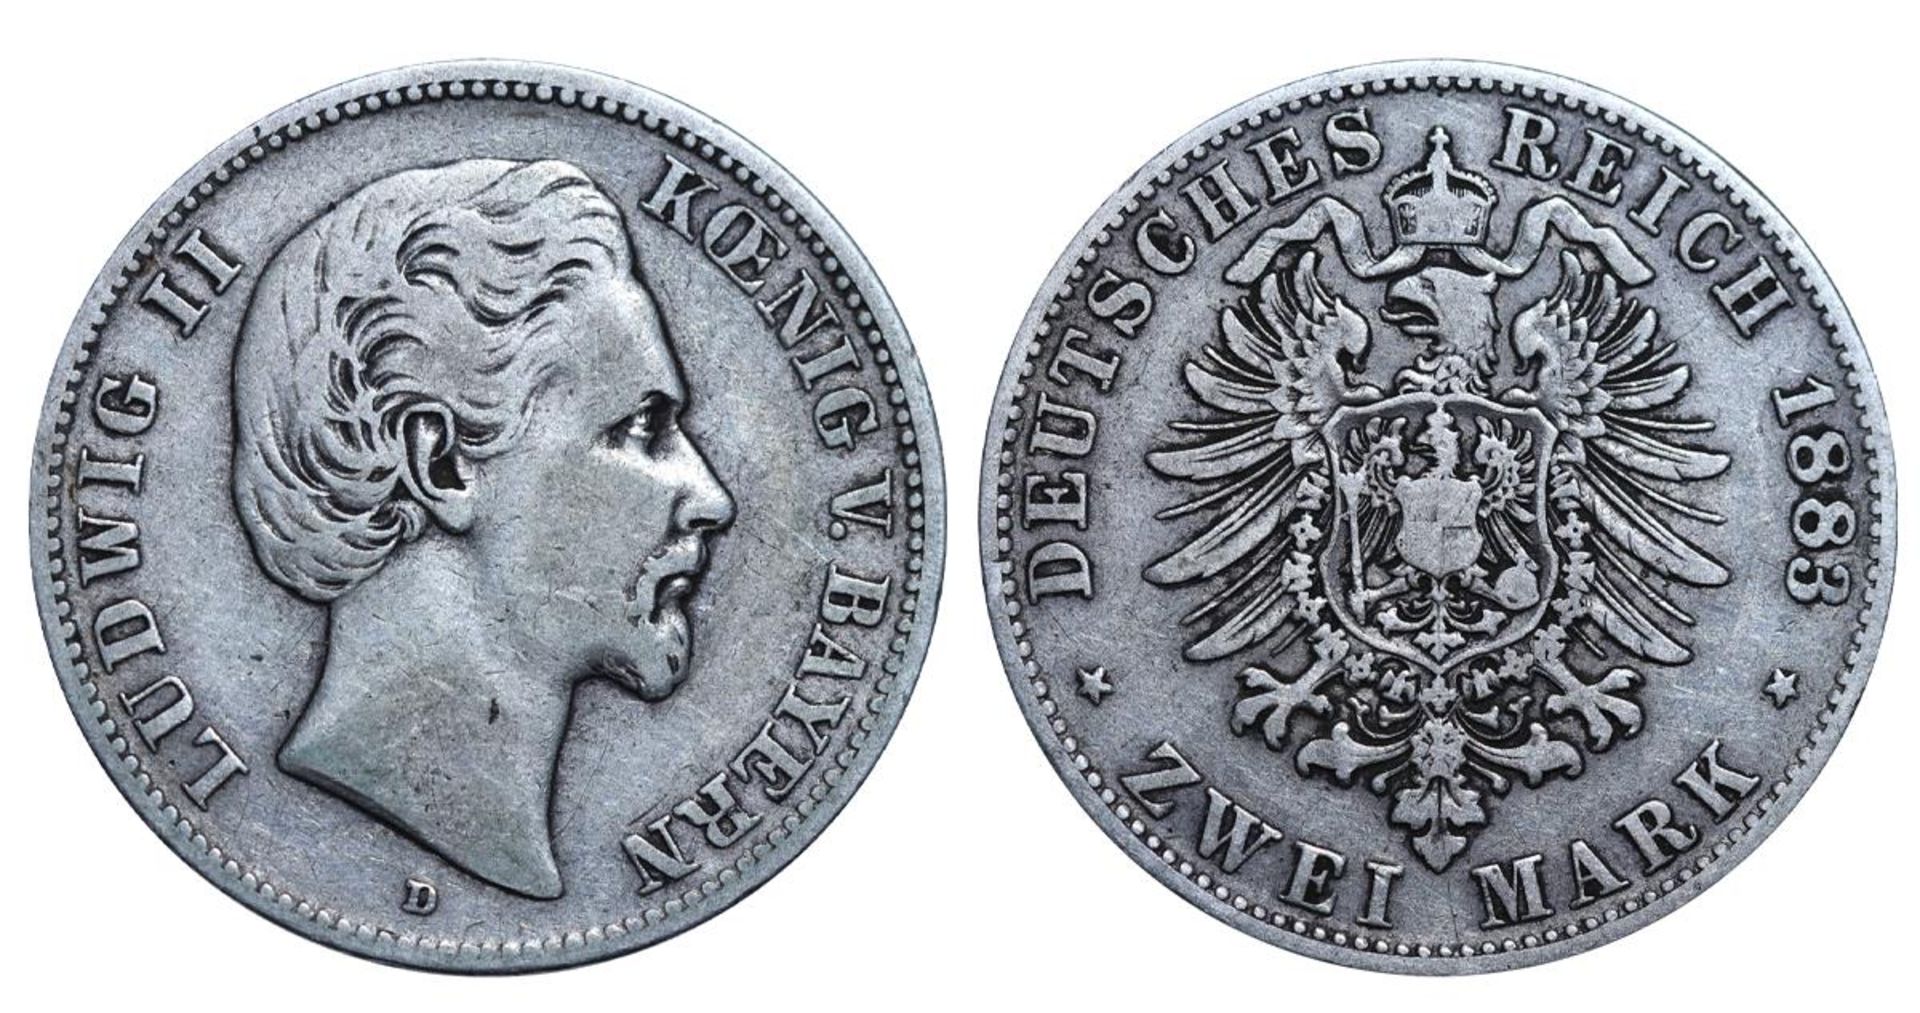 Kingdom of Bavaria, 2 Marks, 1883 year, D